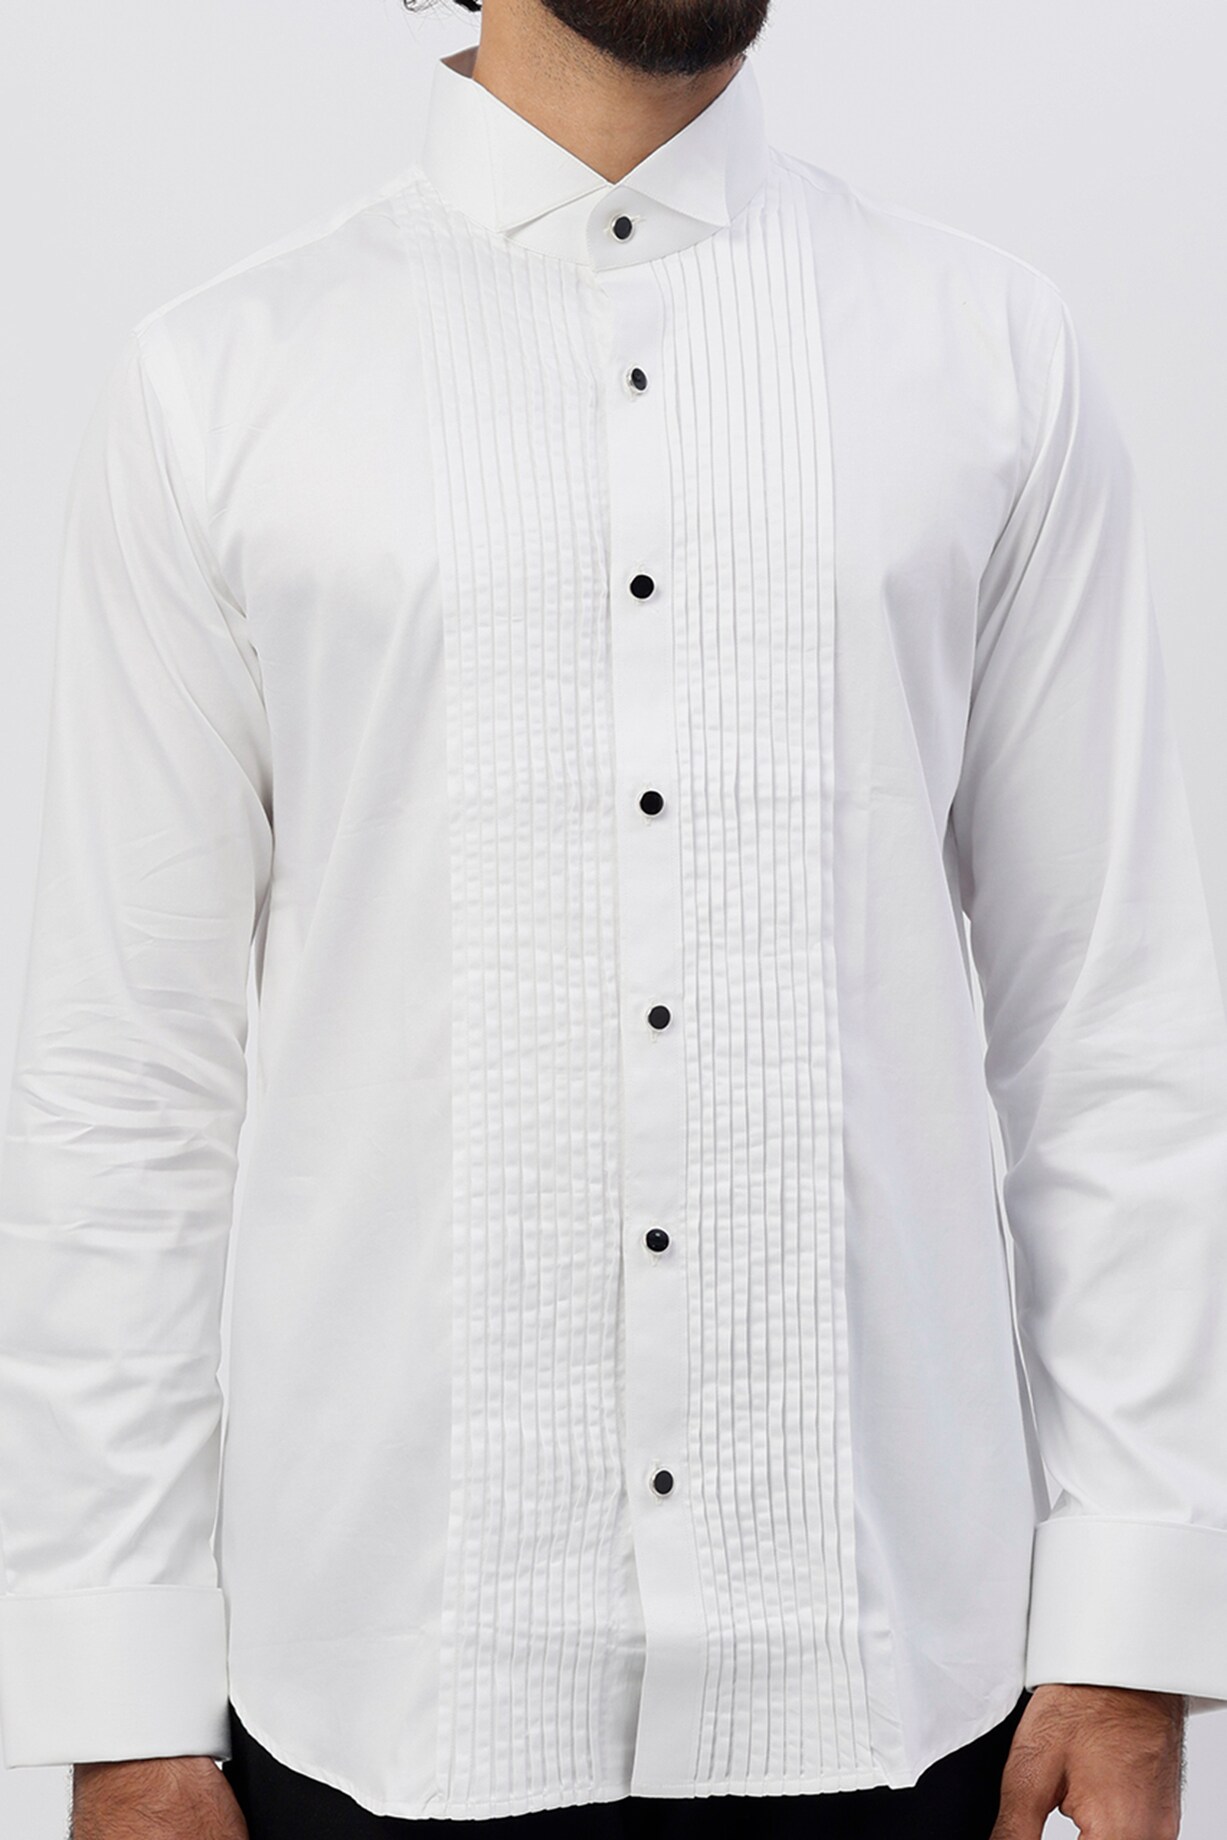 White Cotton Satin Pleated Shirt by Ssavarto